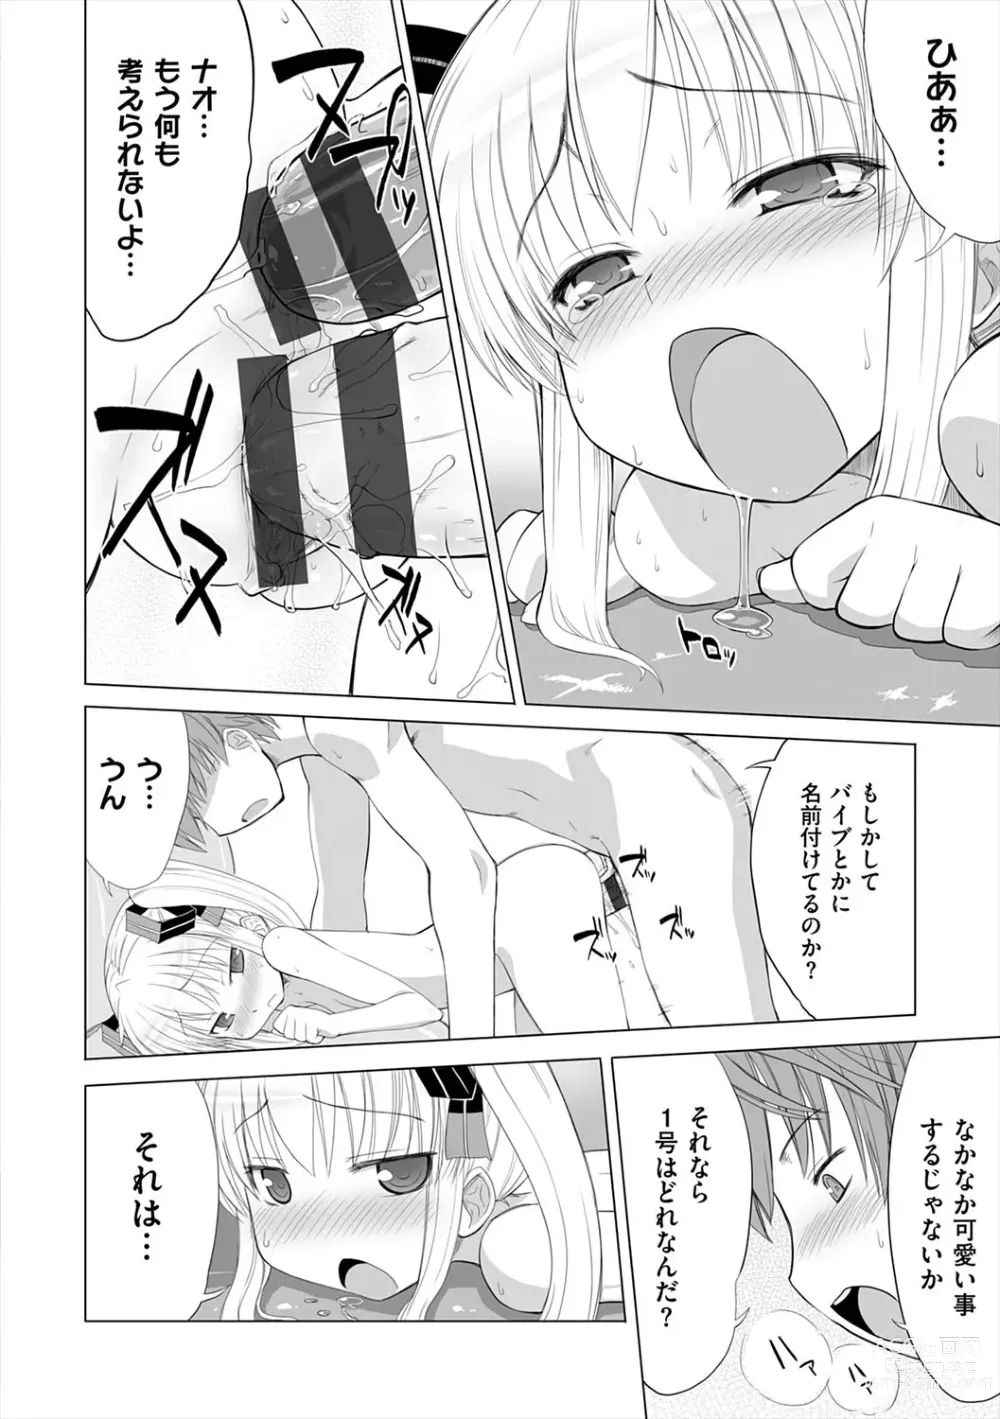 Page 200 of manga Marble Girls